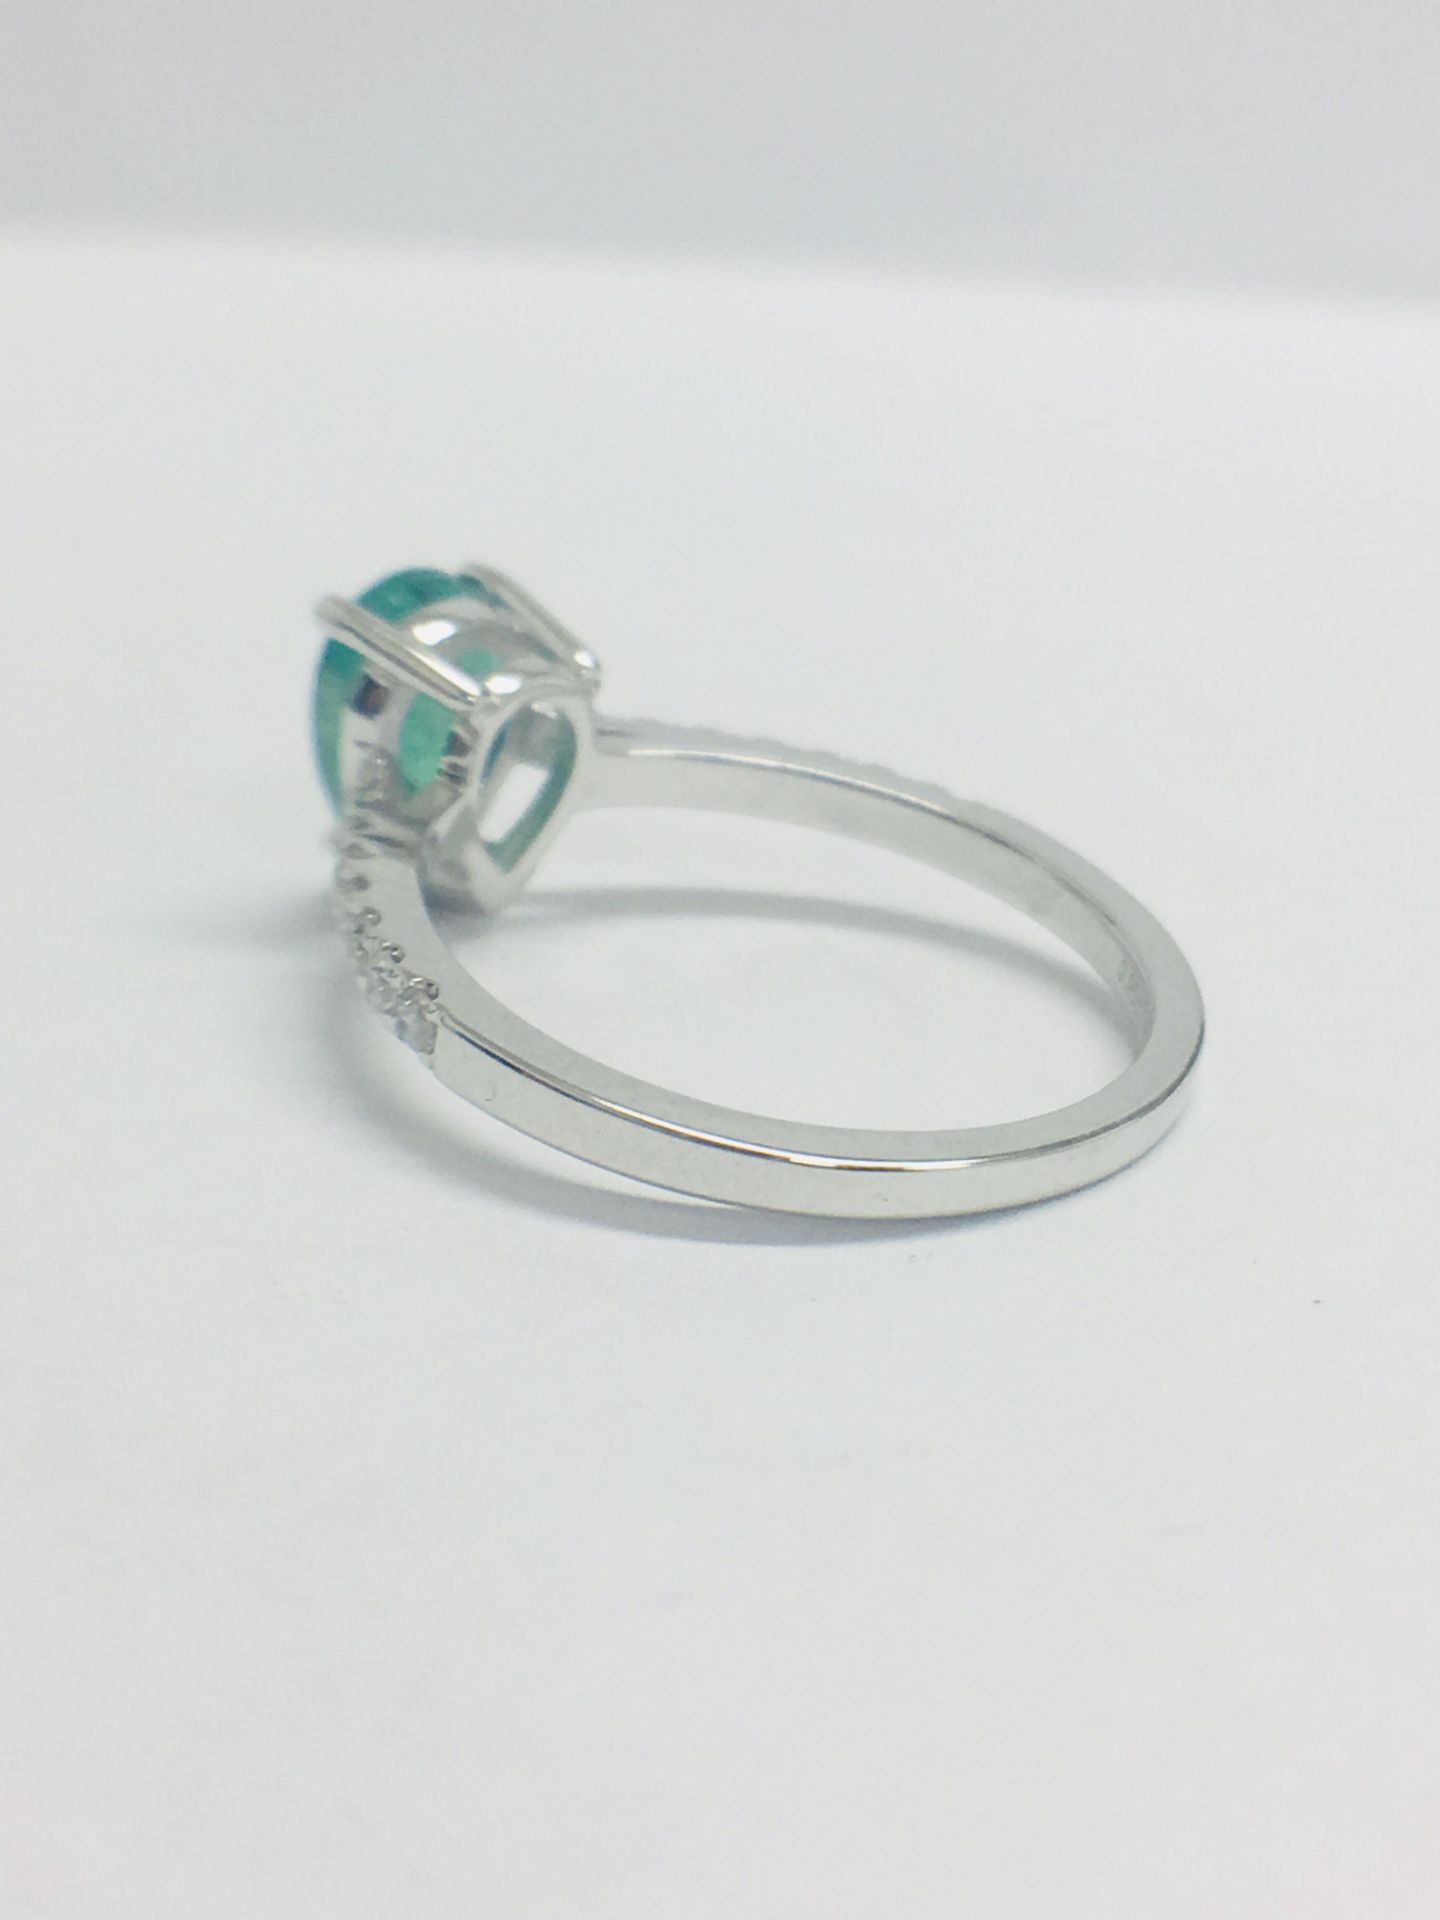 14ct White Gold Emerald & Diamond Ring - Image 4 of 10